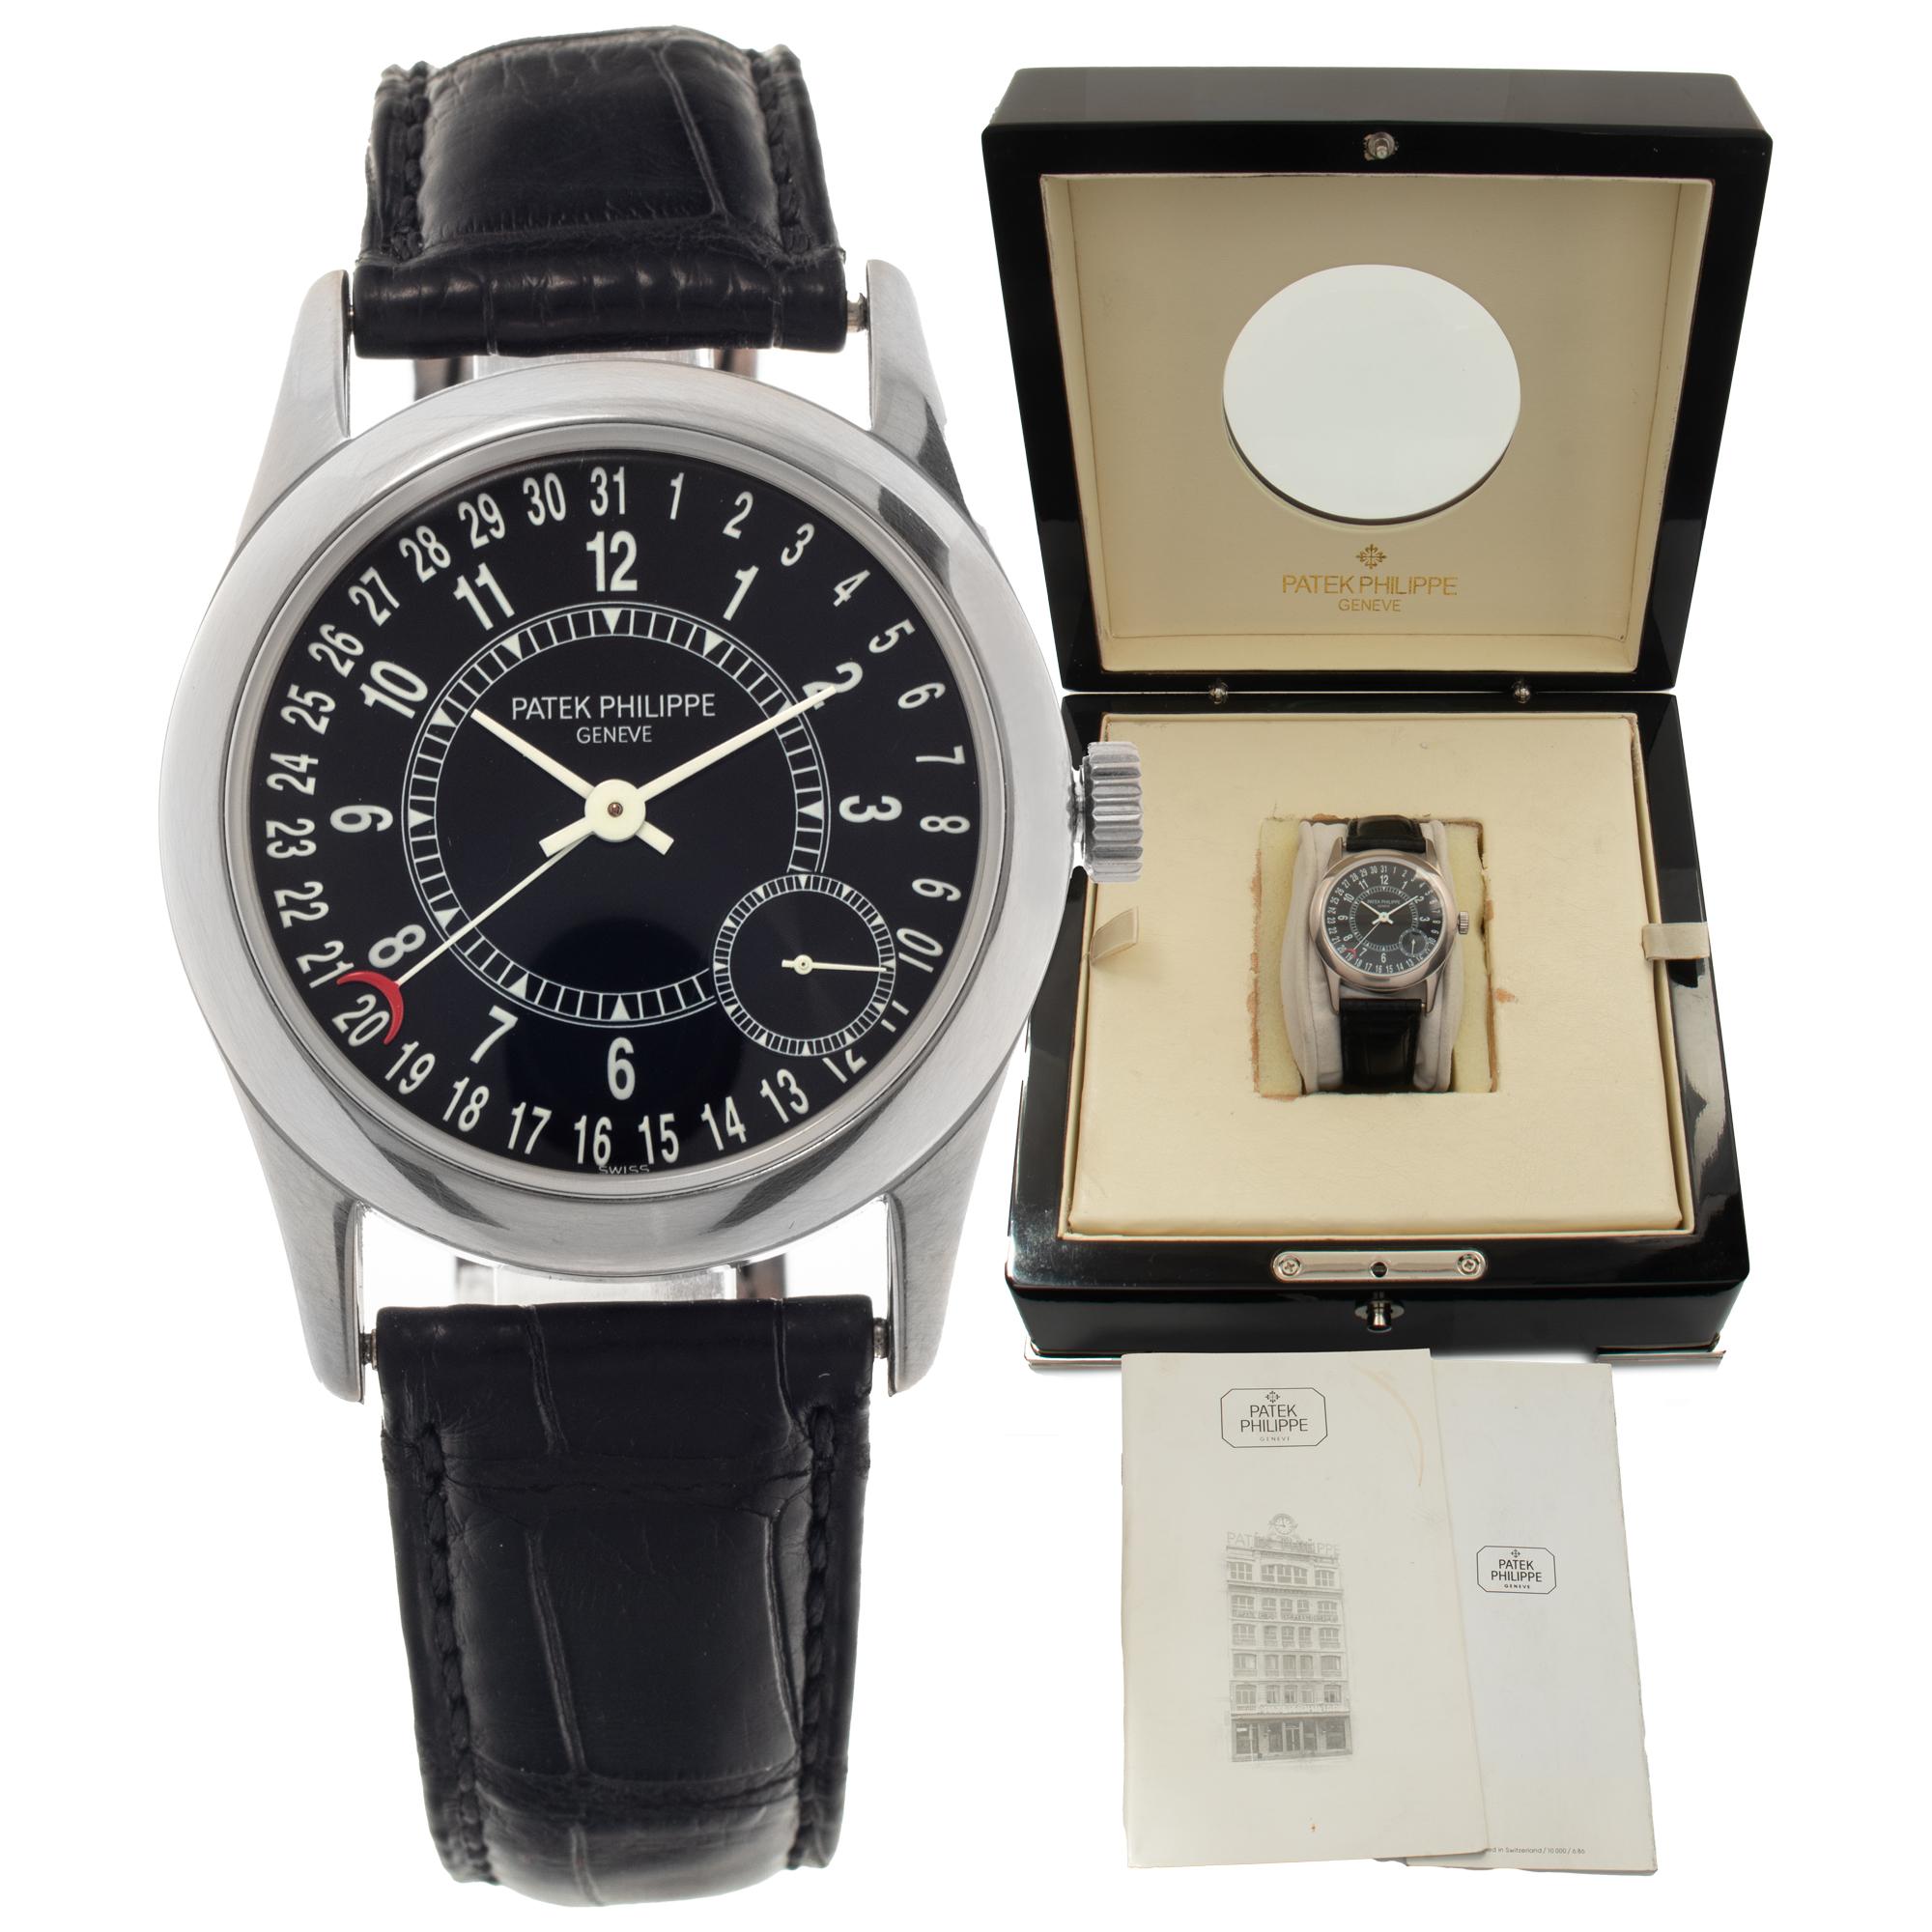 Patek Philippe Calatrava 18k white gold Automatic Wristwatch Ref 6000g For Sale 3